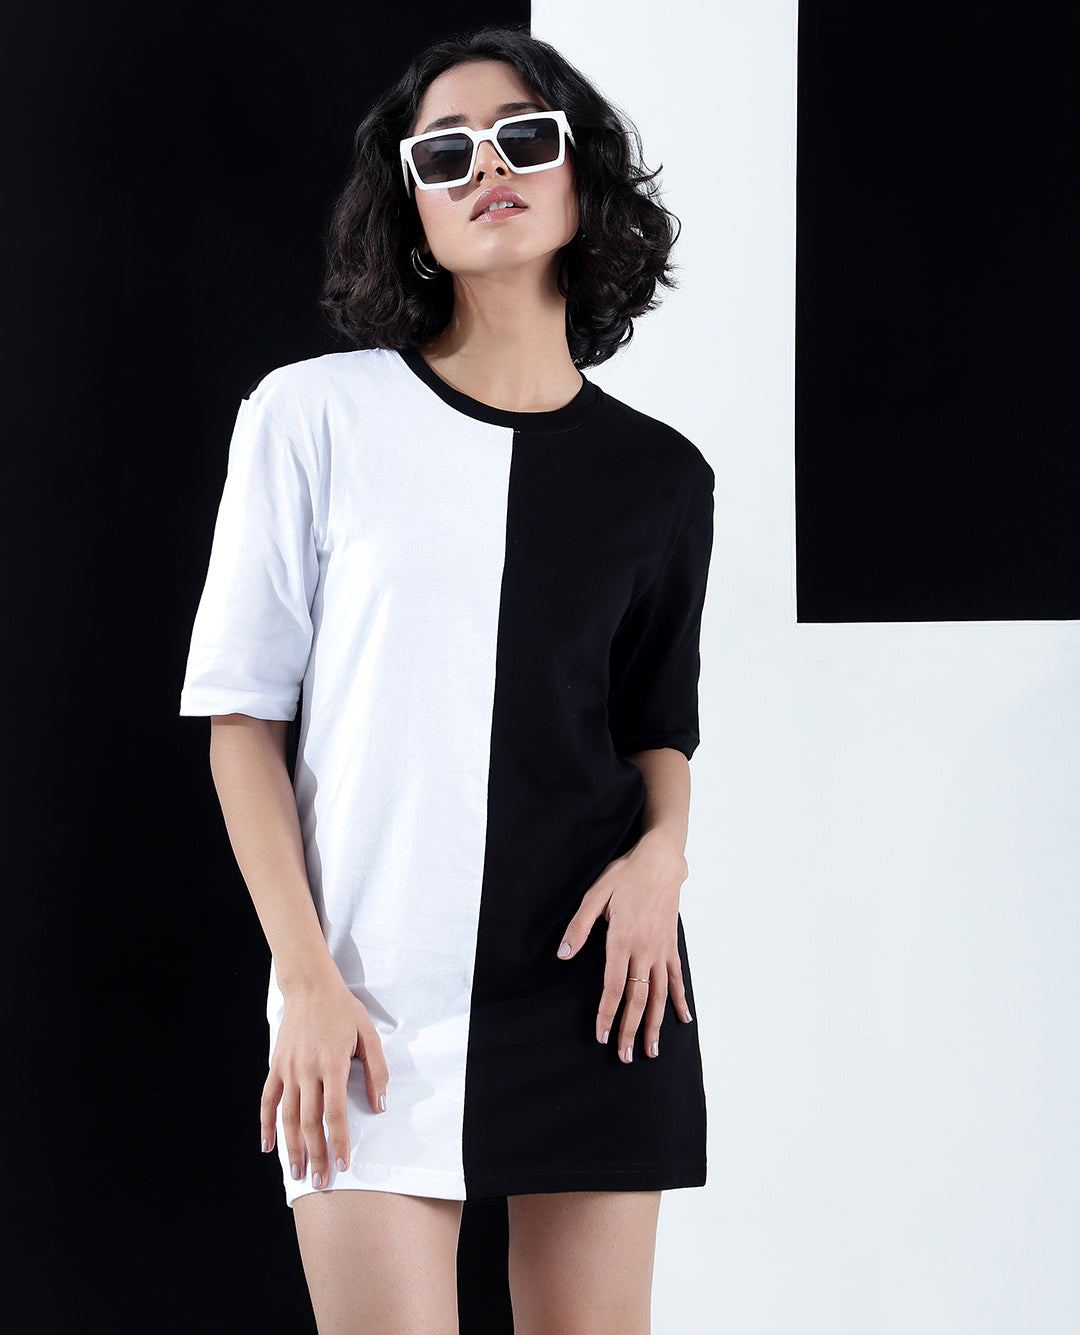 Women's Black and White T-shirt Mini Dress